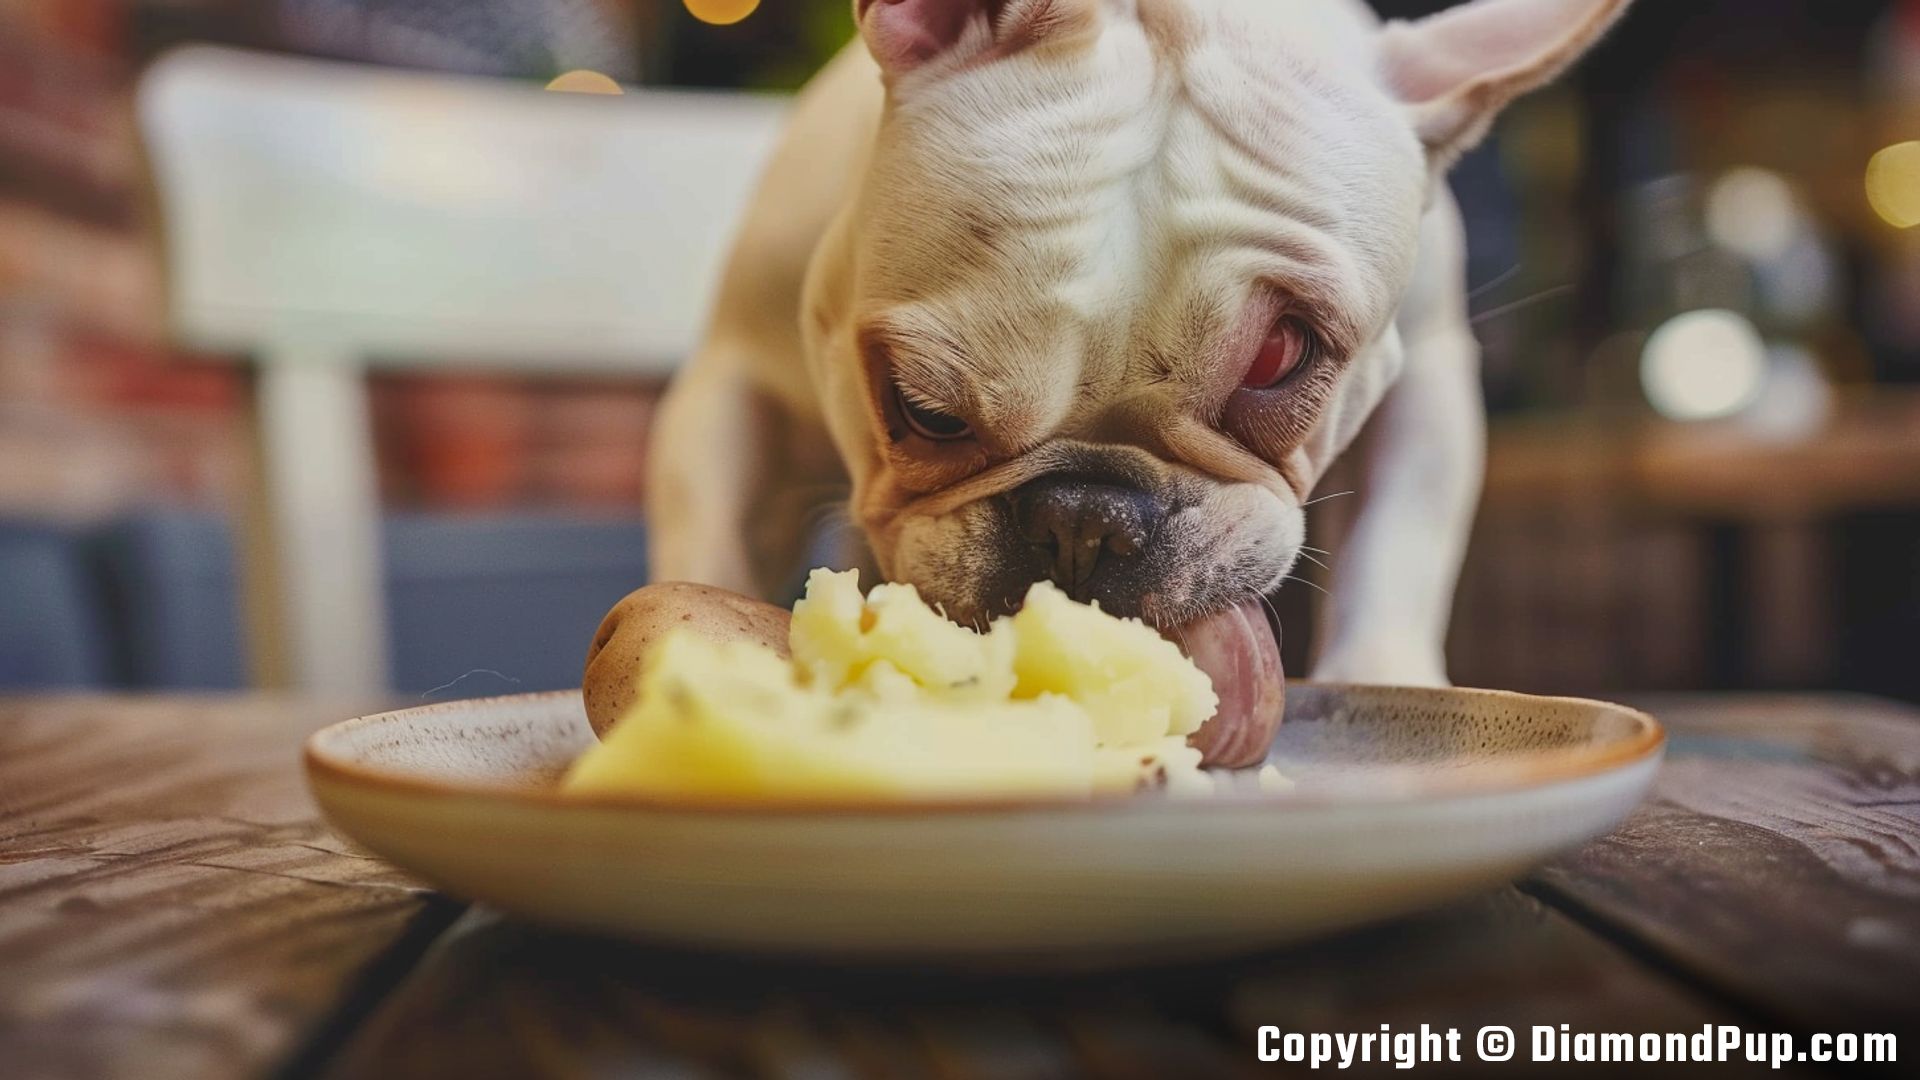 Image of a Playful French Bulldog Snacking on Potato